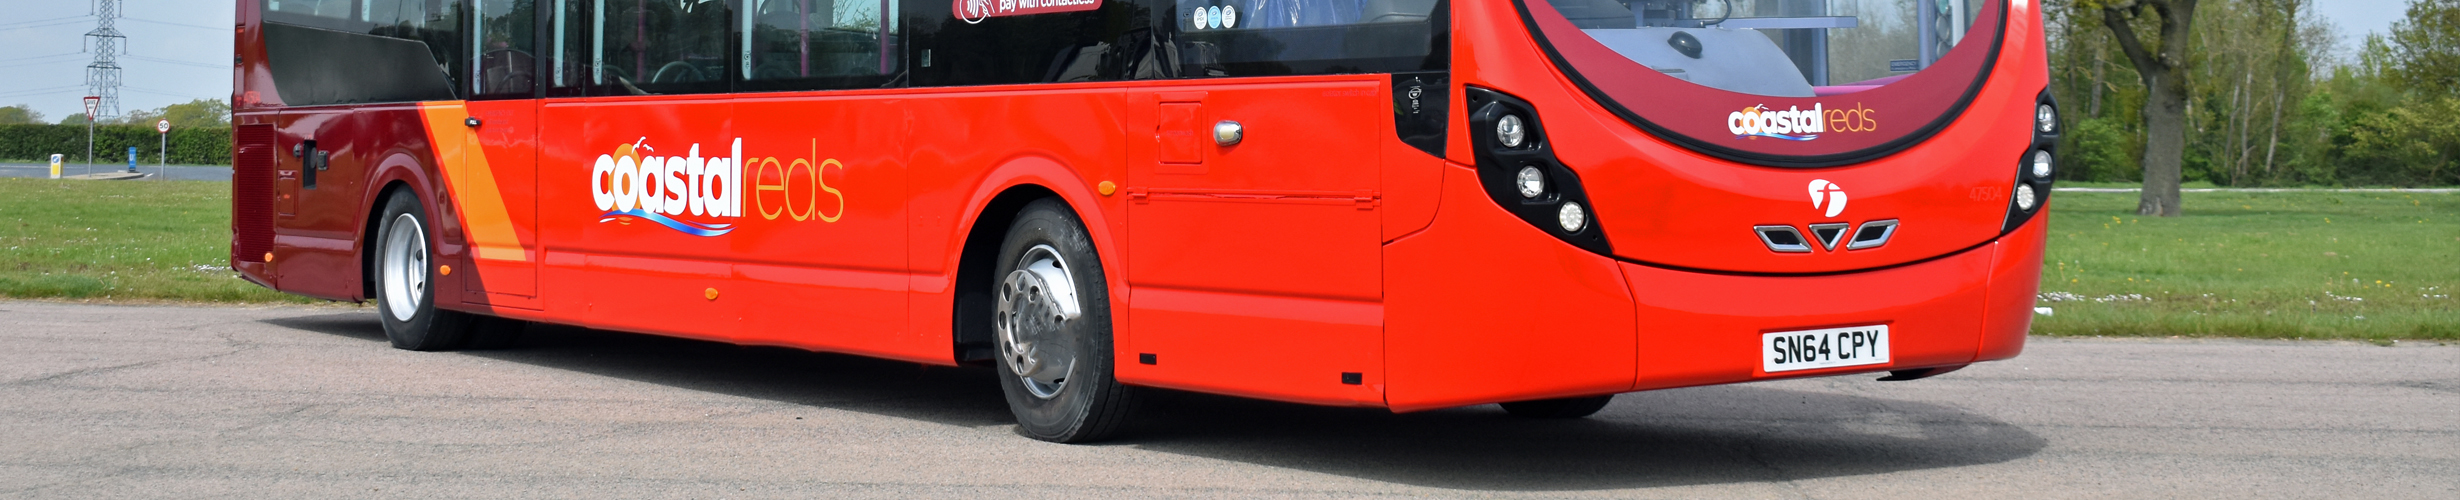 bus journey planner norwich